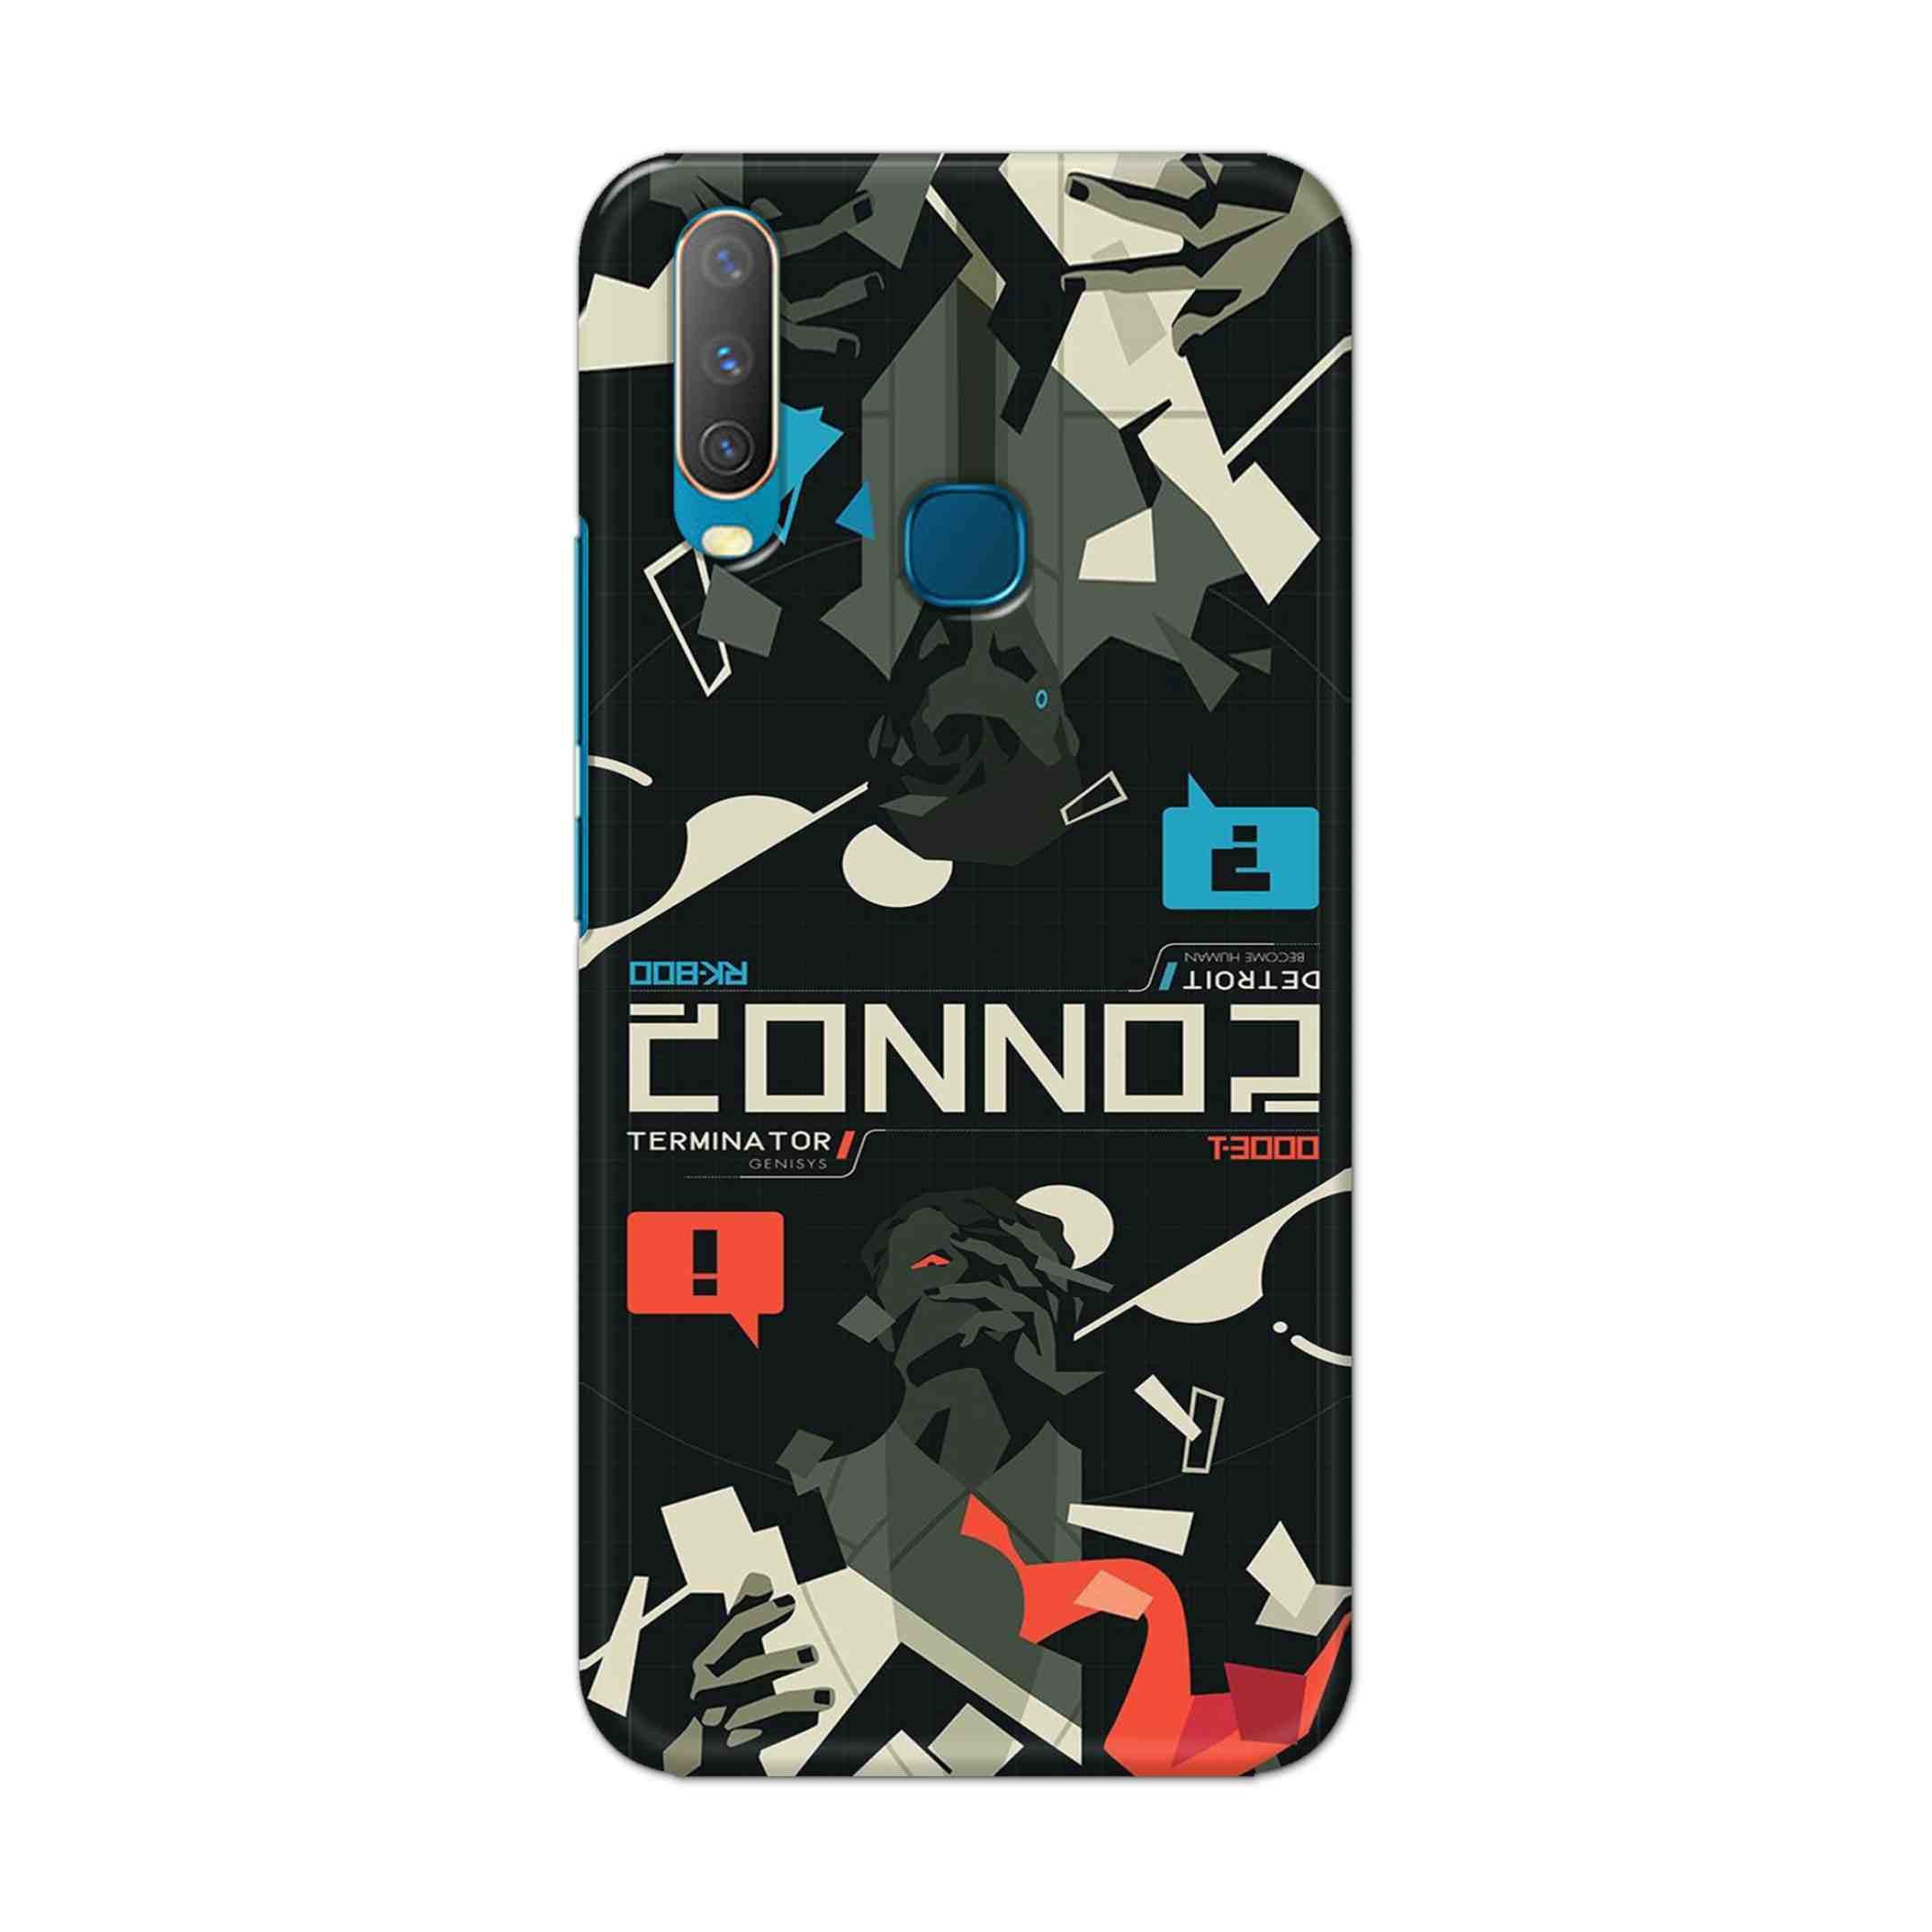 Buy Terminator Hard Back Mobile Phone Case Cover For Vivo Y17 / U10 Online